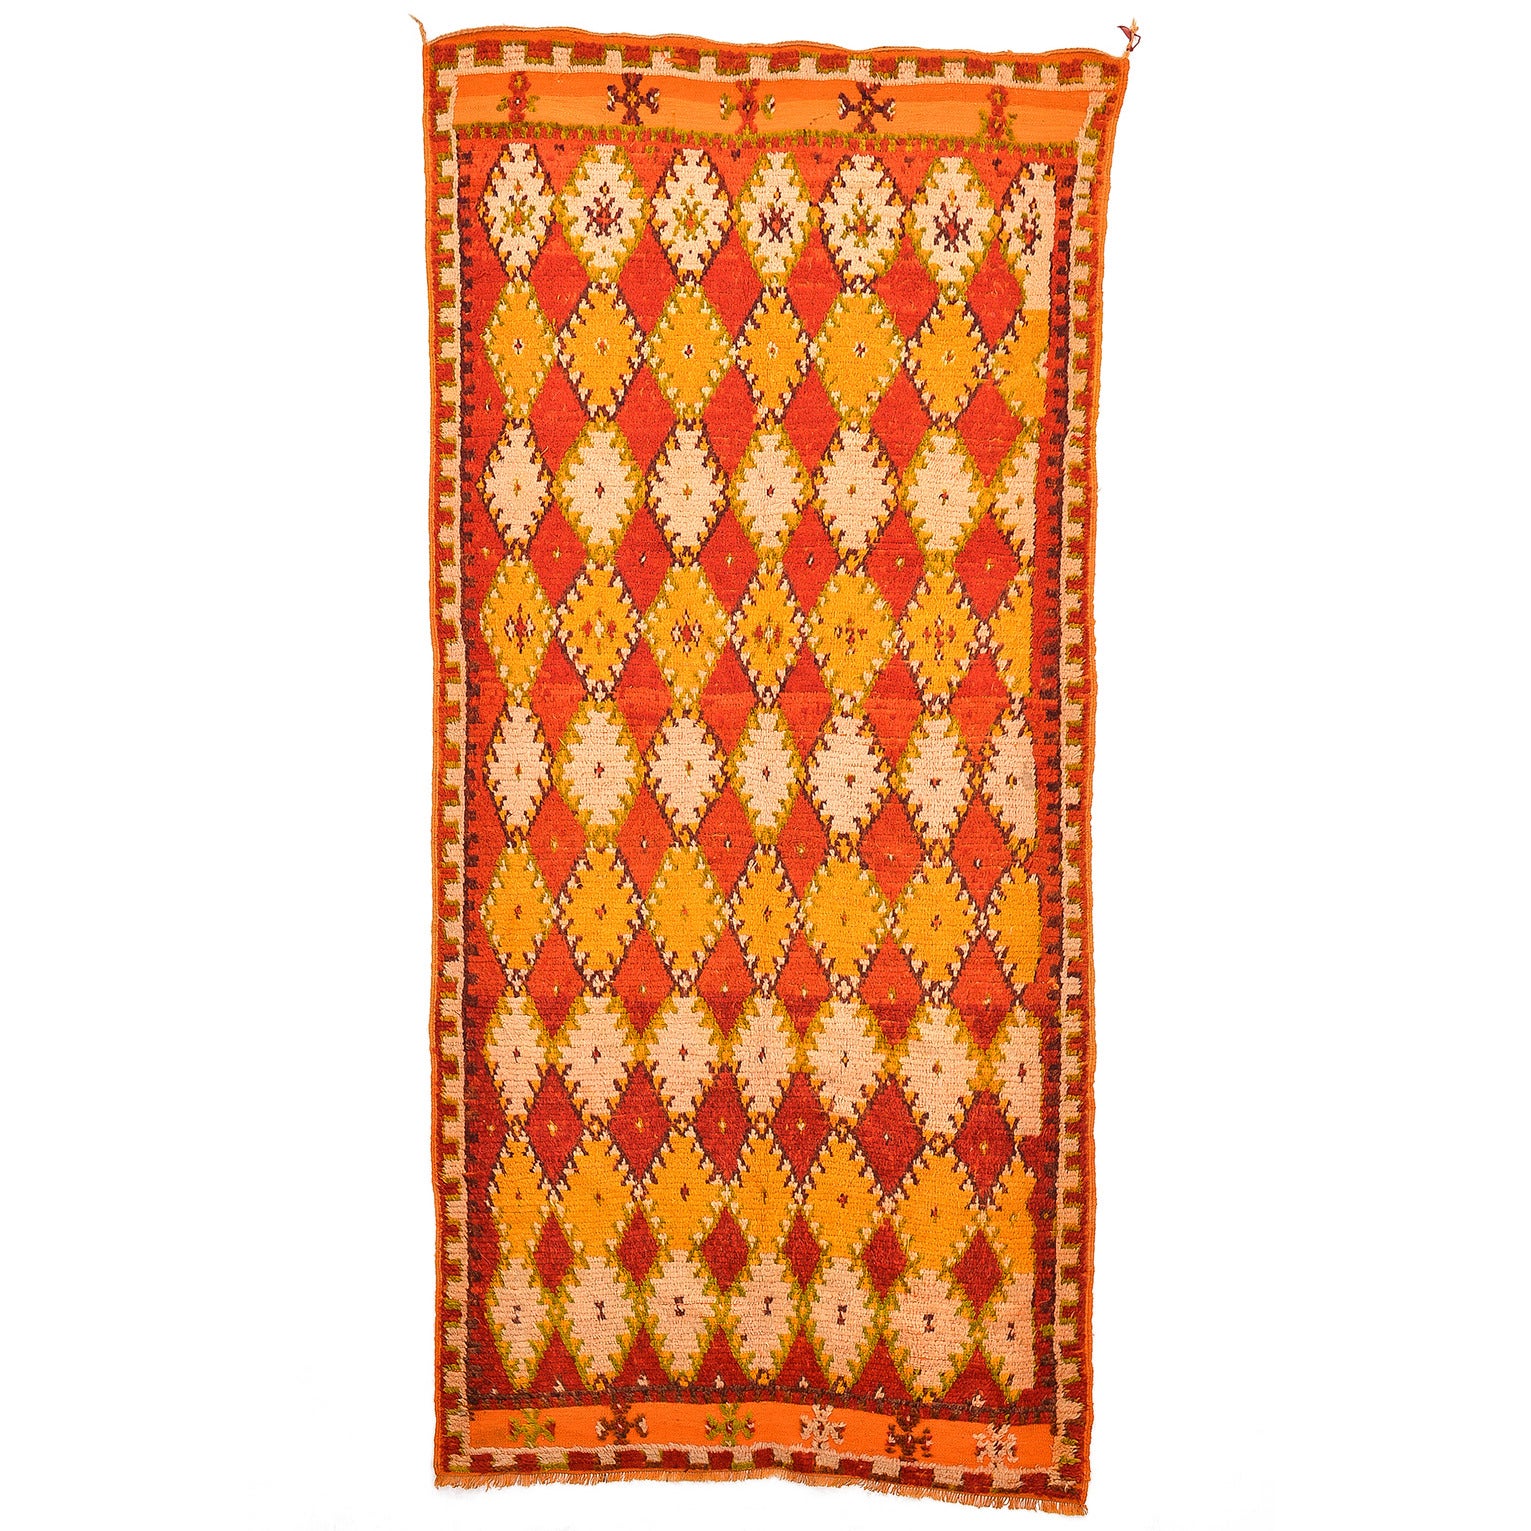  Vintage Ait Touaya, Moroccan Carpet